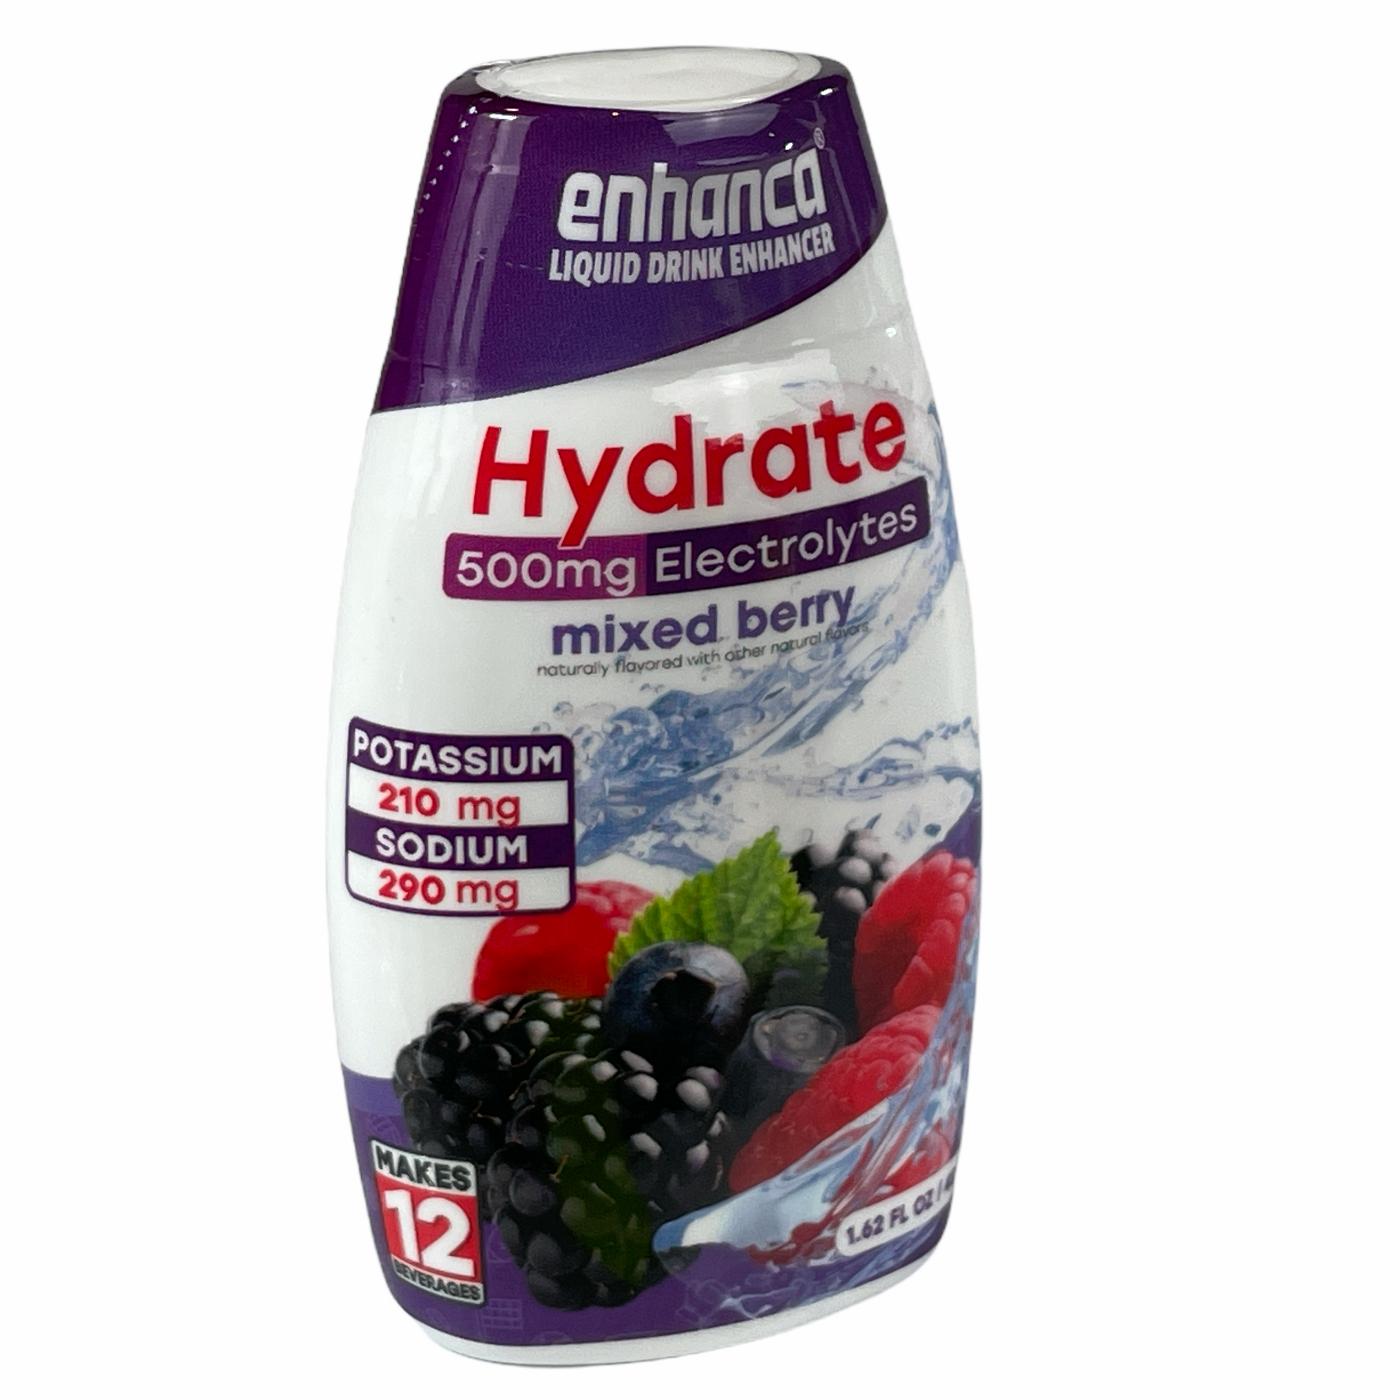 Enhanca Hydrate 500MG Electrolytes Mixed Berry Liquid Drink Enhancer; image 2 of 3